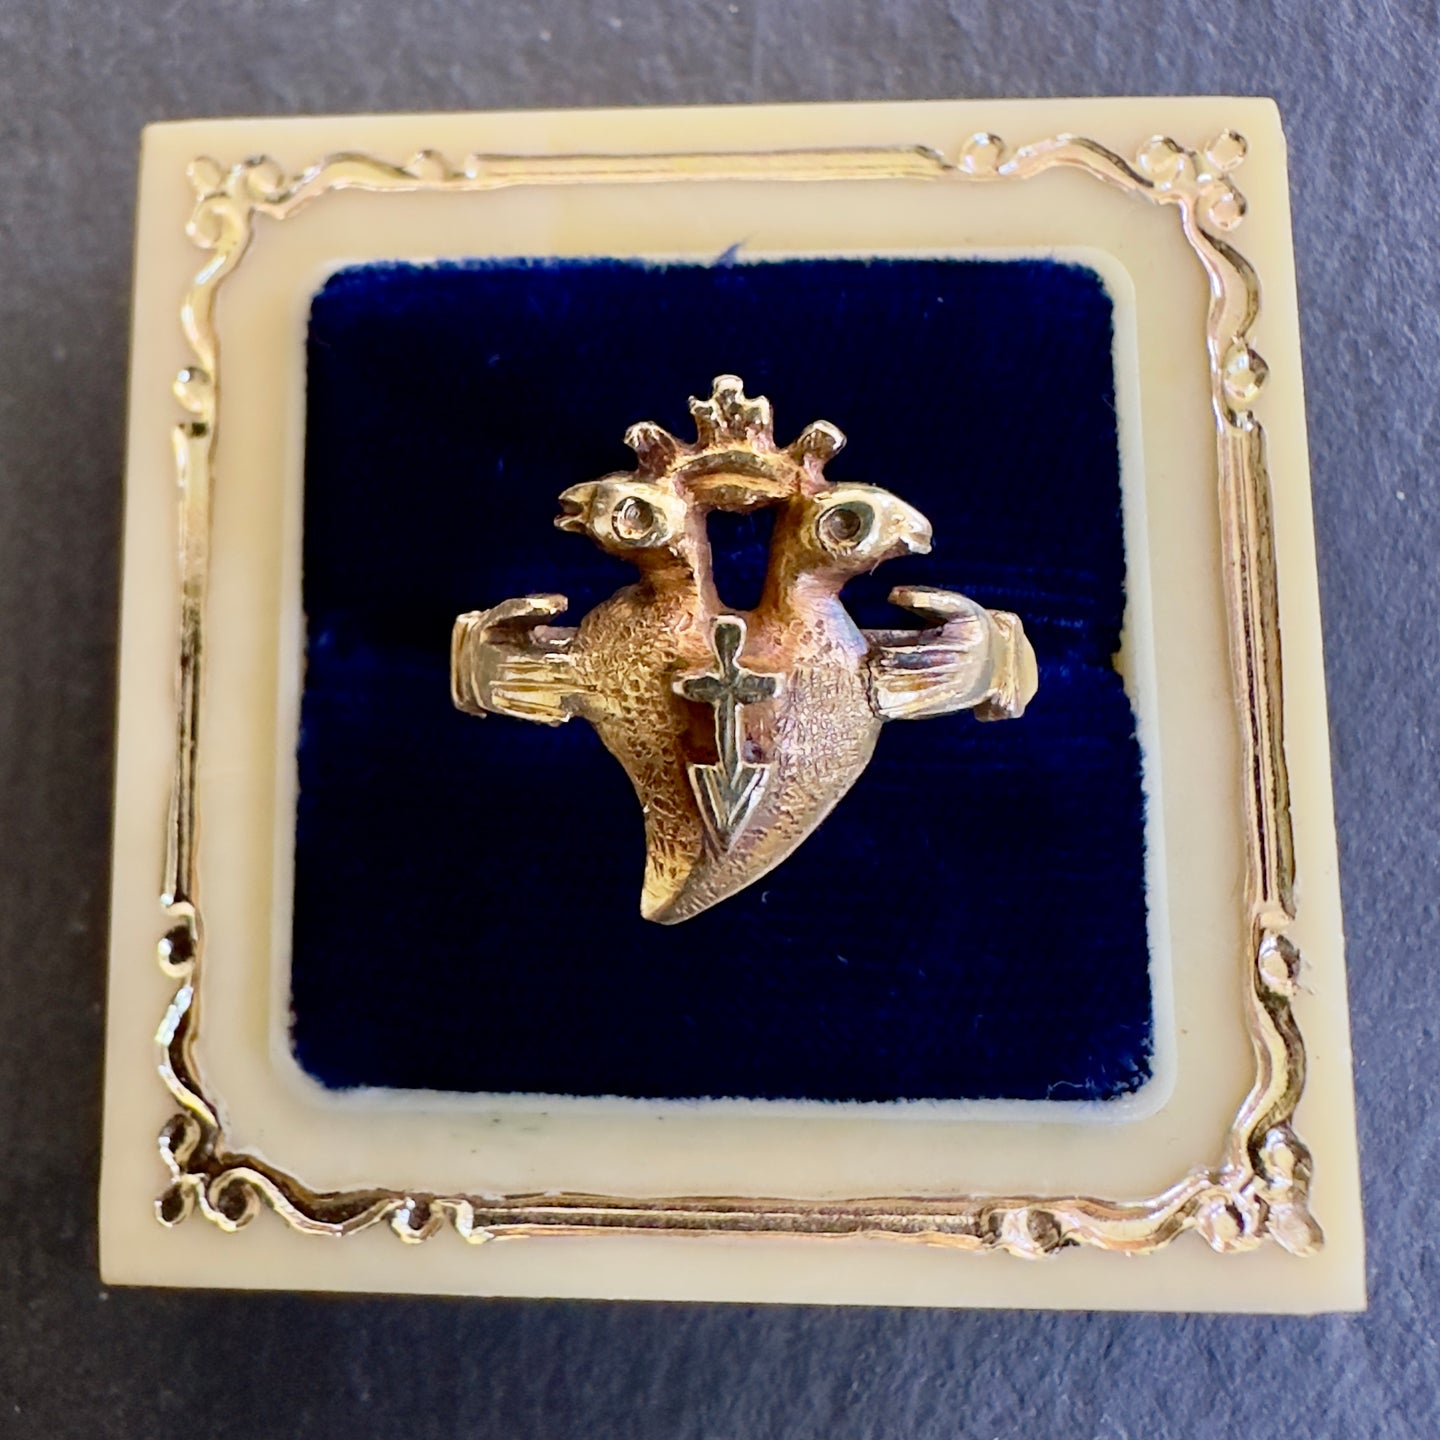 German Gold Heart Ring